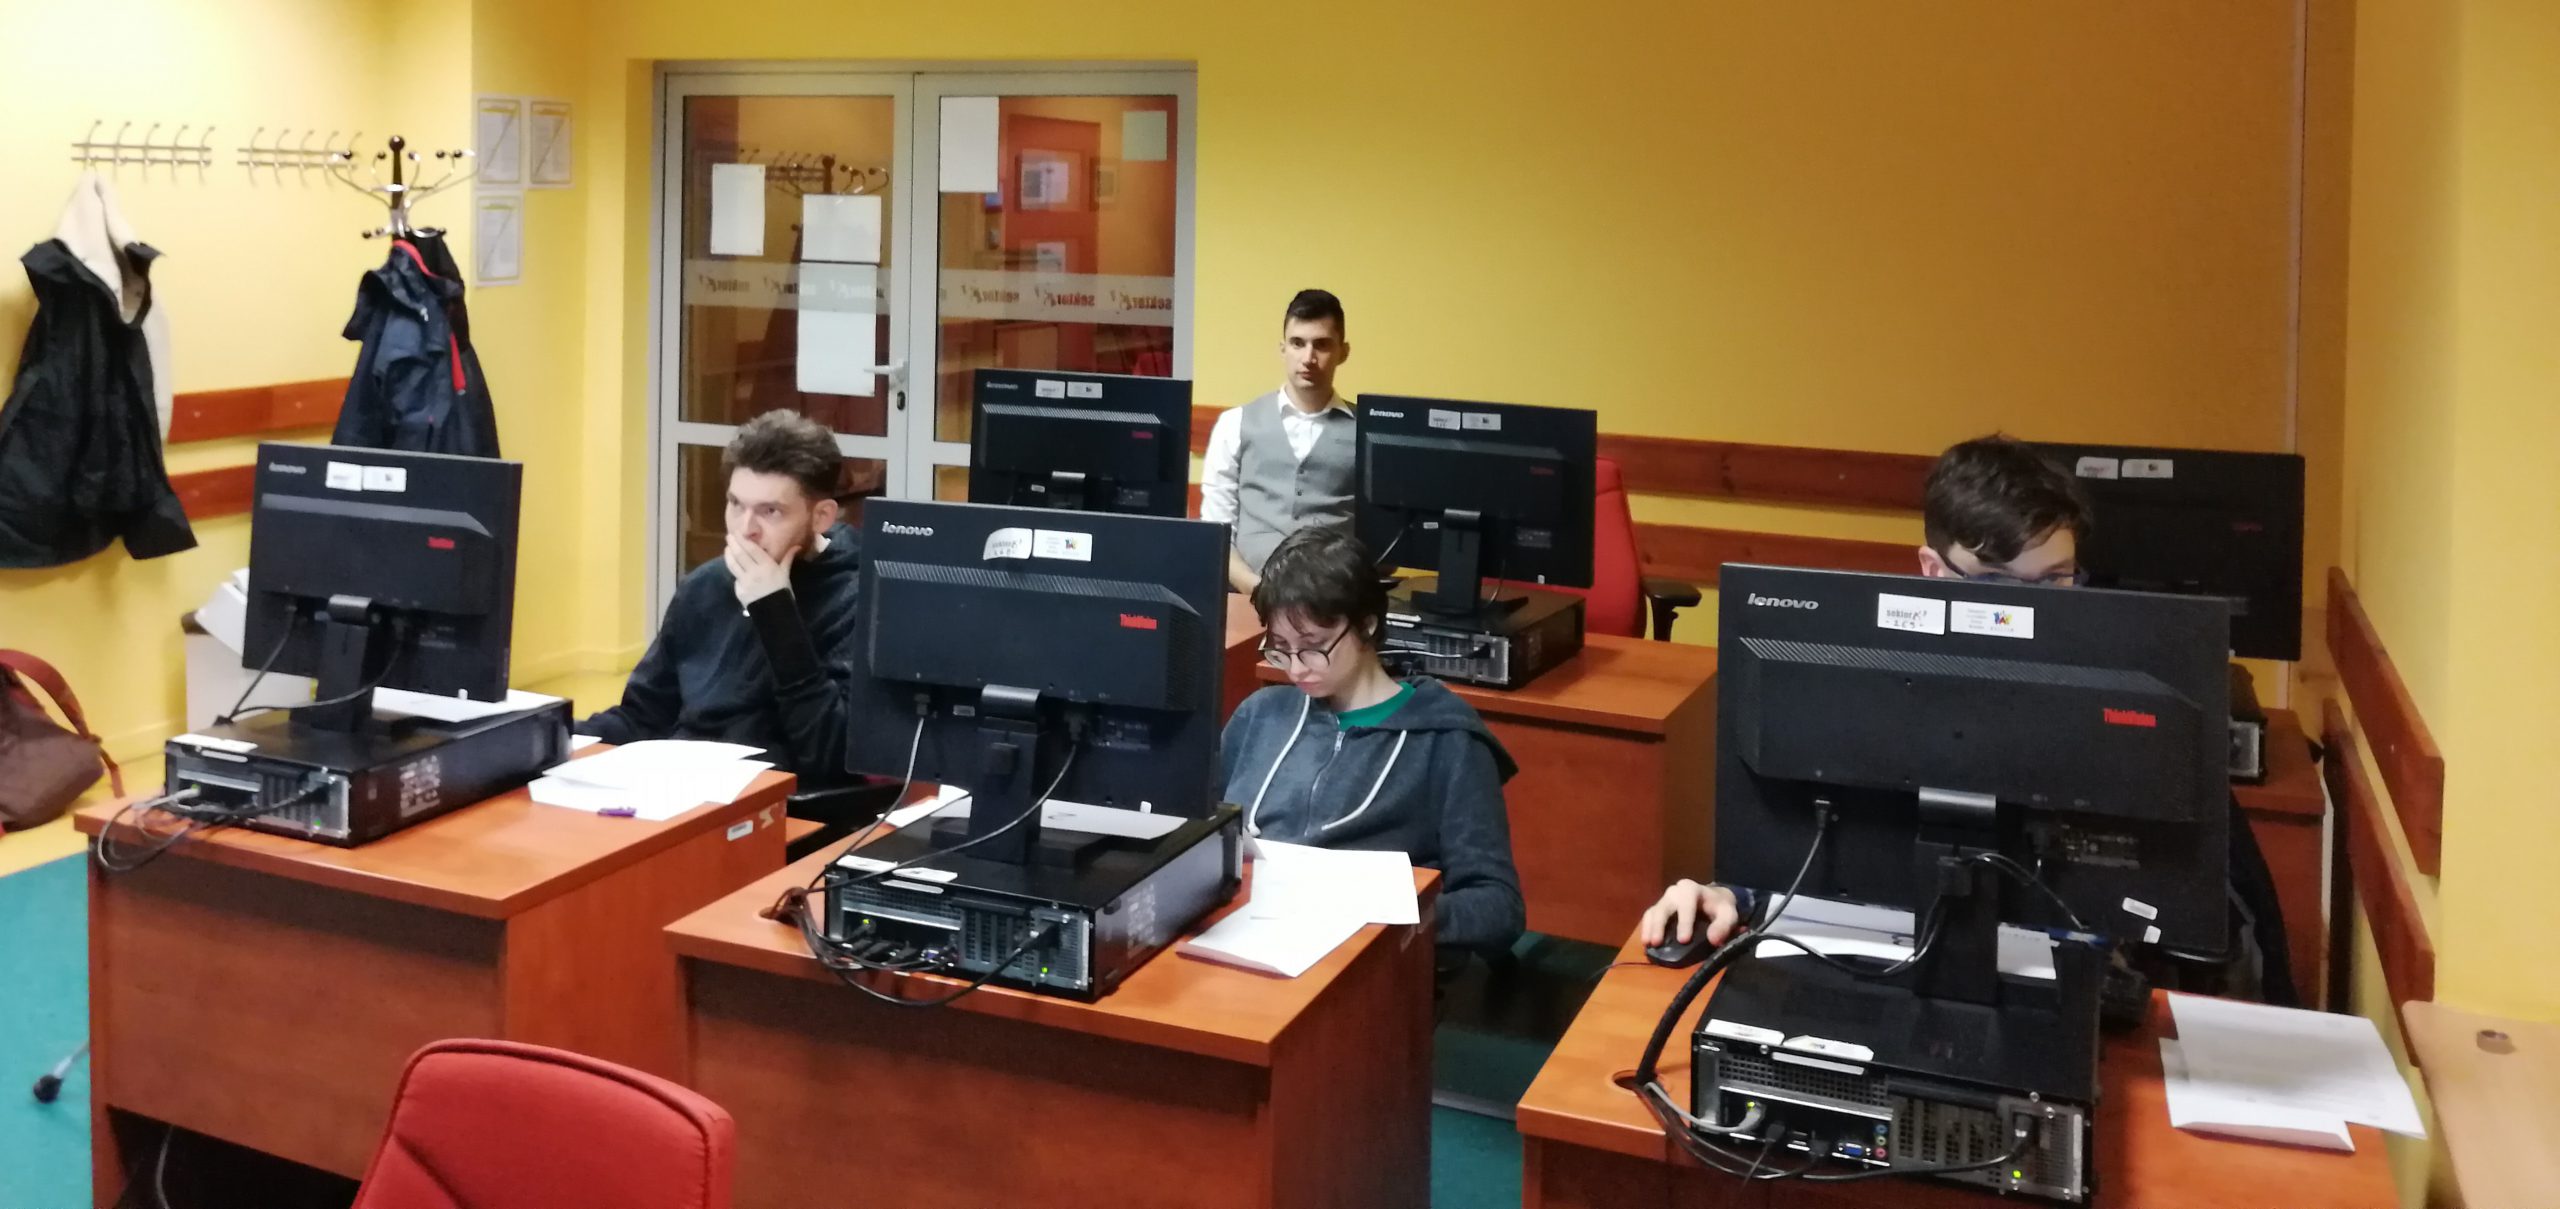 IT knowledge test – asperIT Wrocław II, December 19, 2019